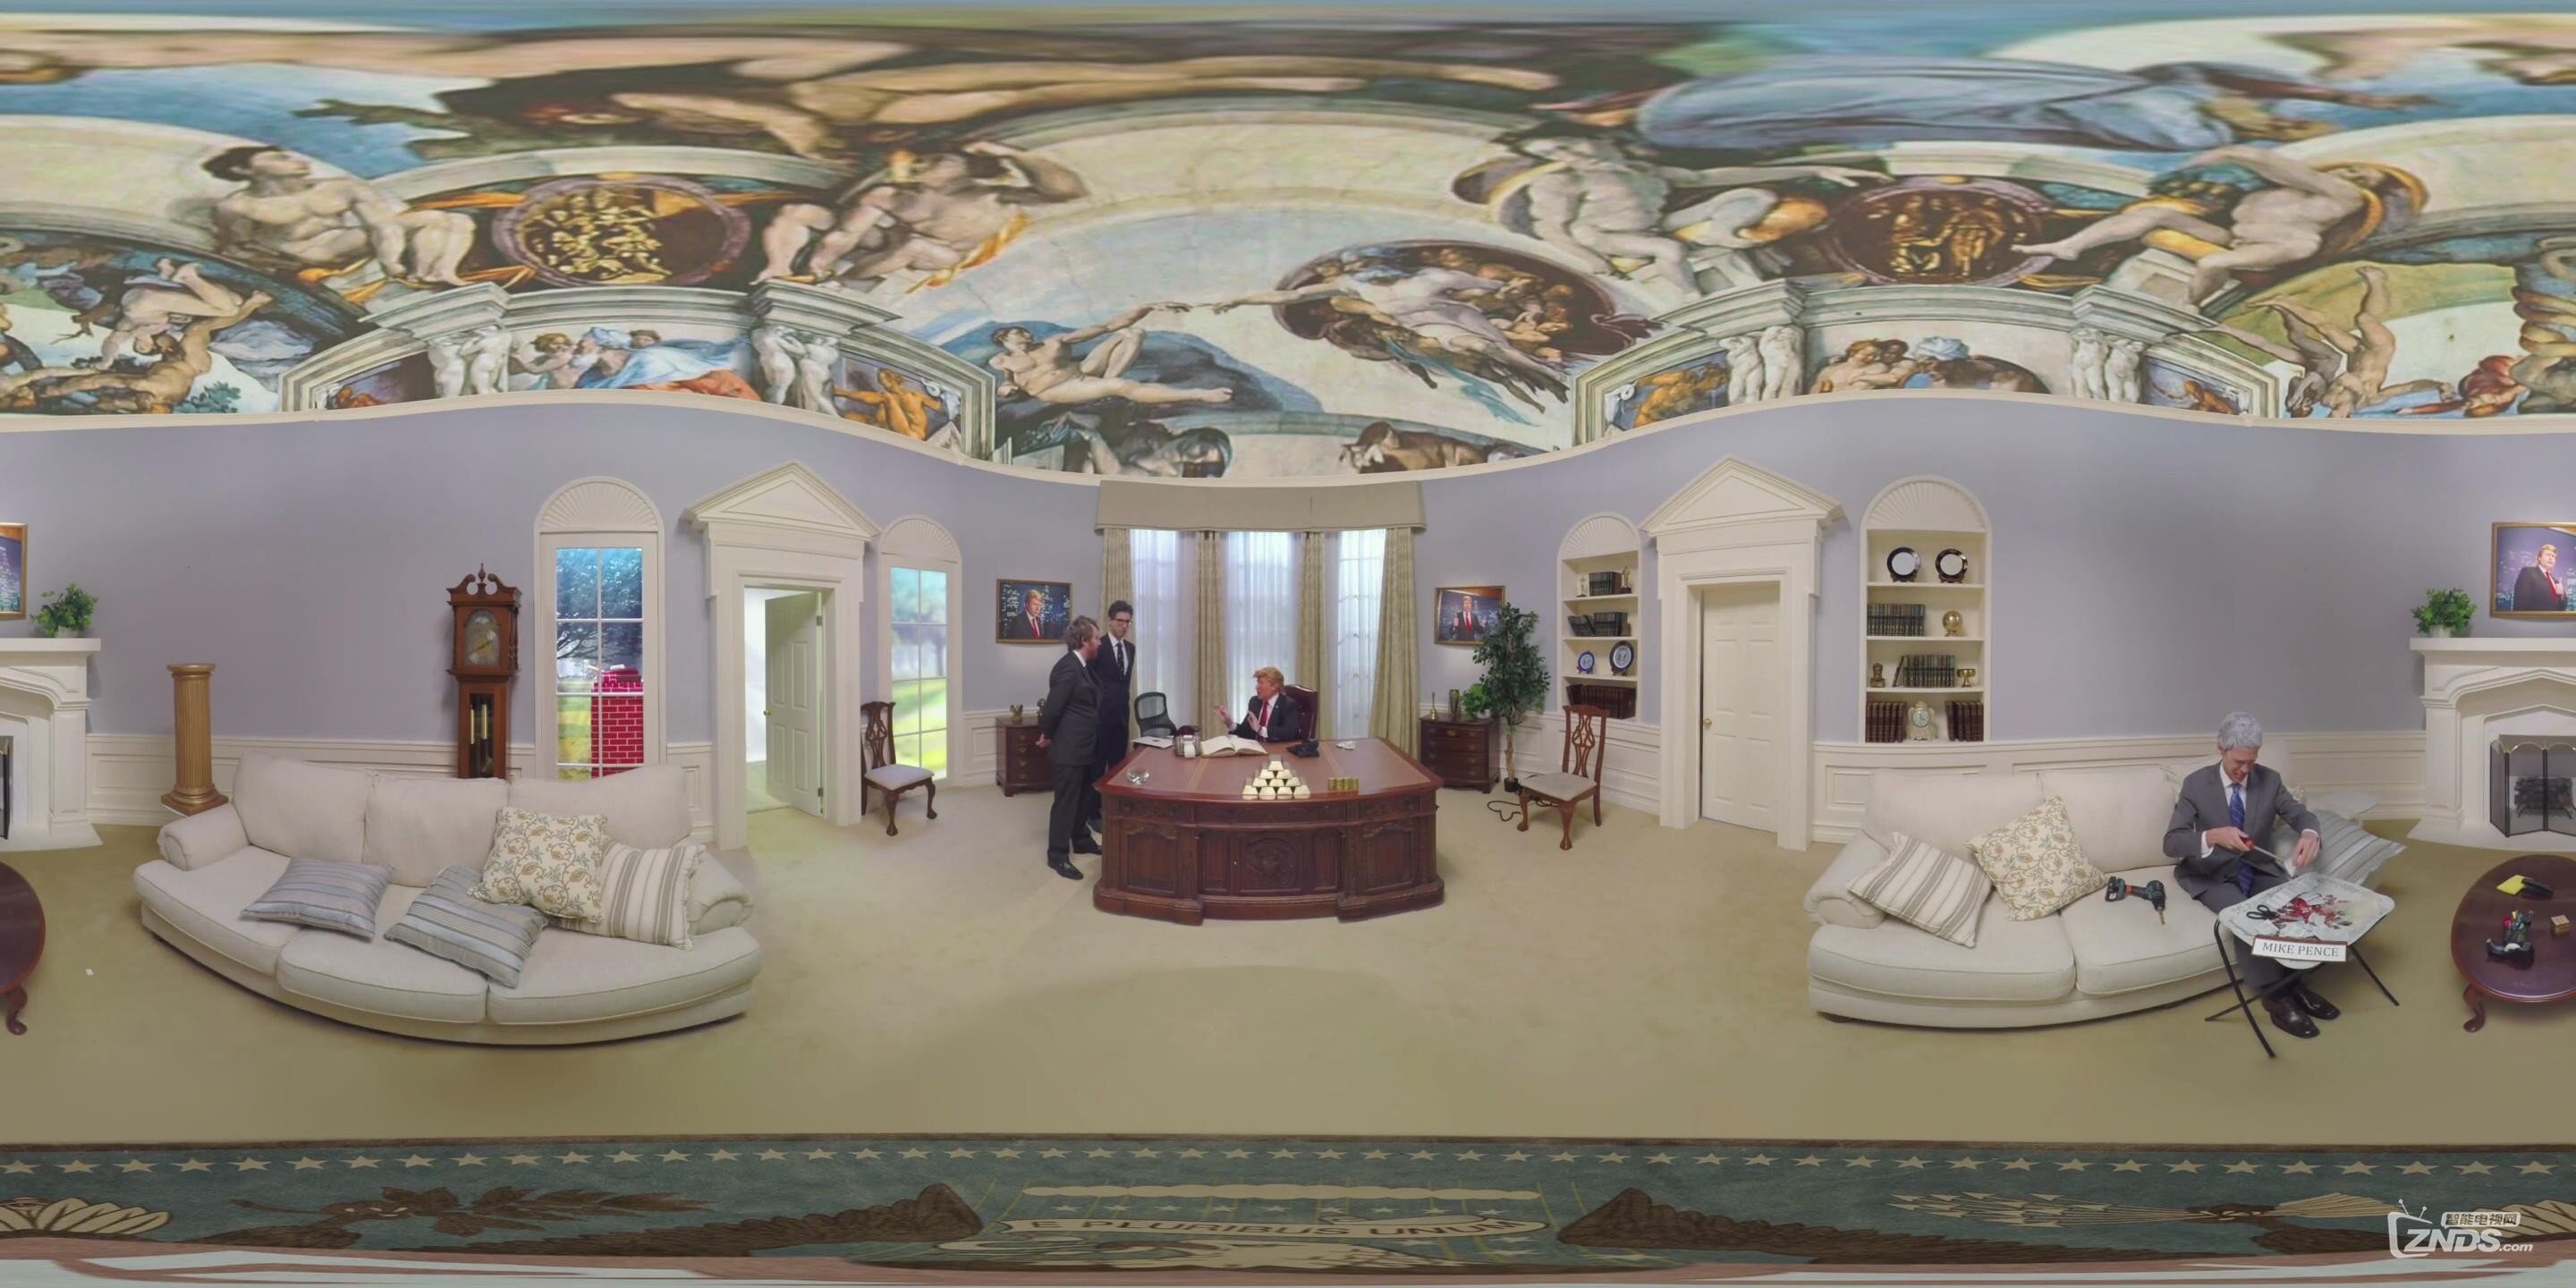 Photos: President Biden's Oval Office